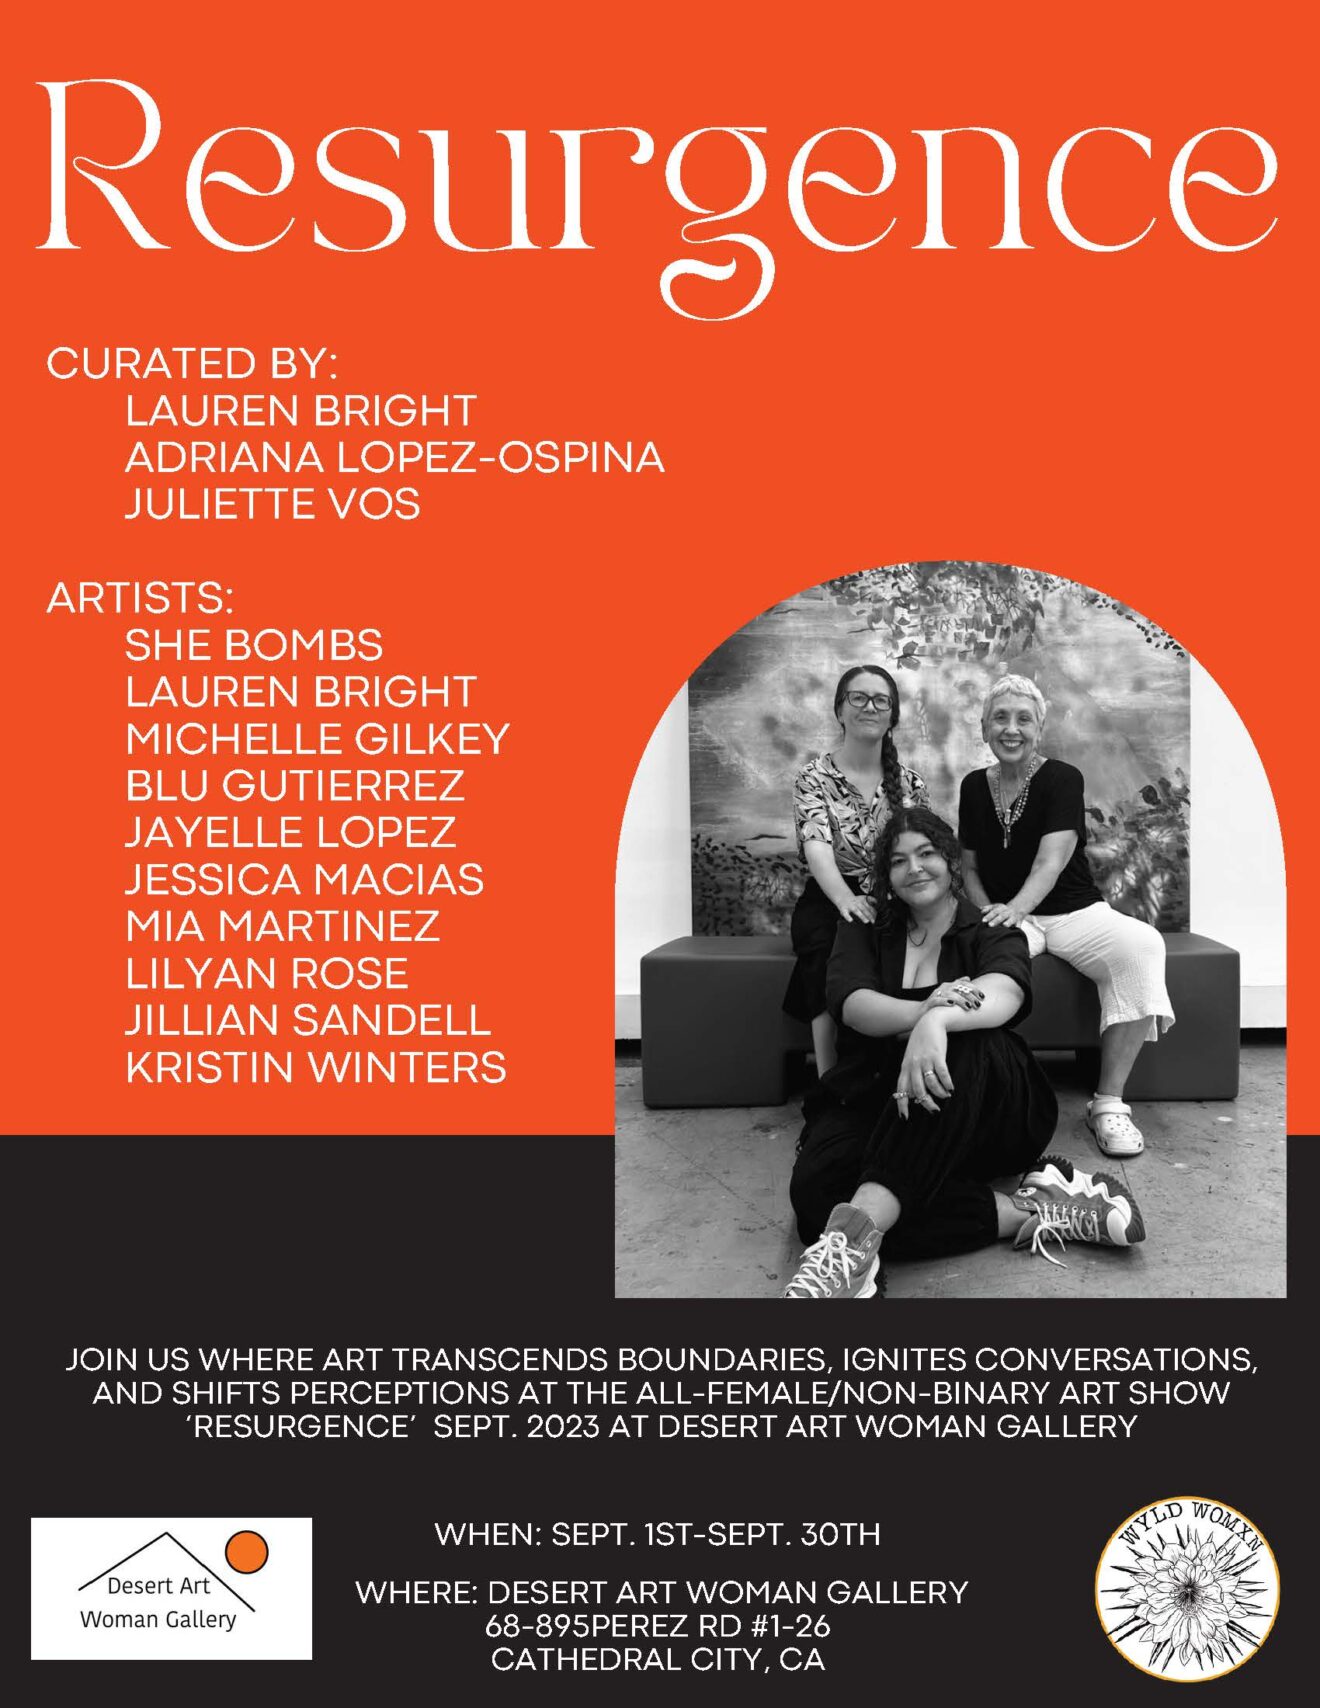 “RESURGENCE” All-female/non-binary art show at Desert Art Woman Gallery welcomes programming partner Wyld Womxn Feminist Art Collective